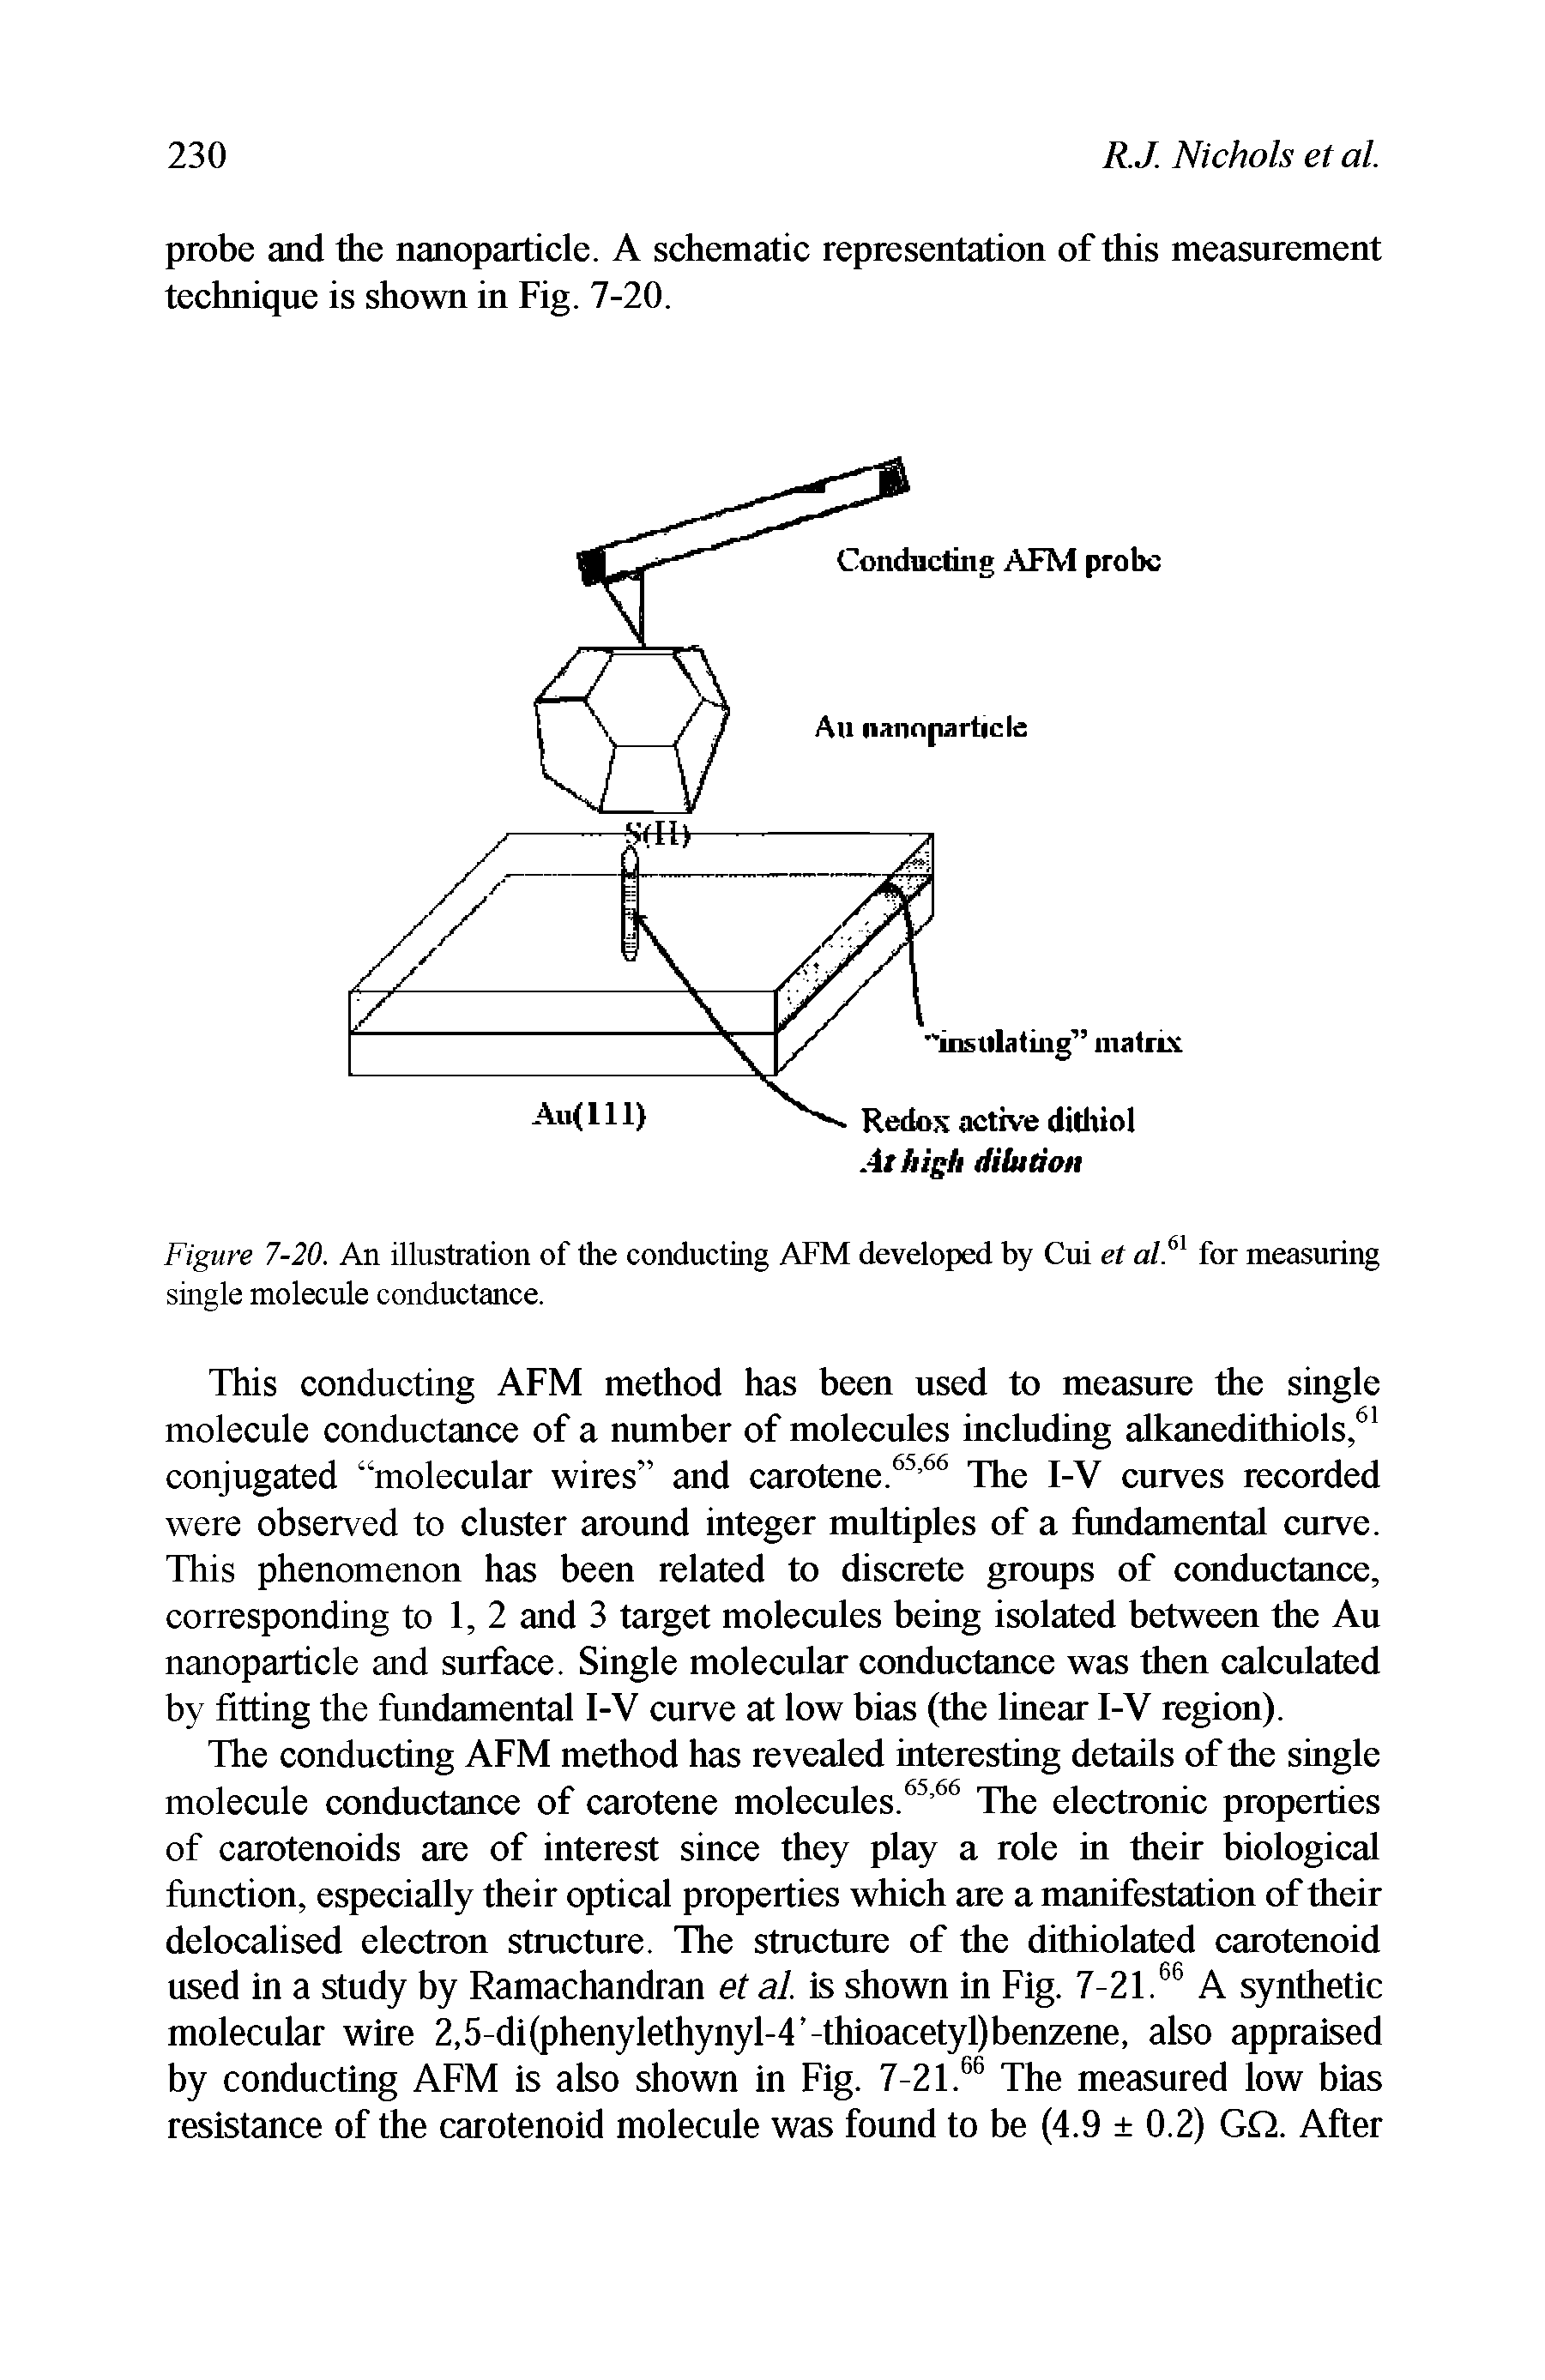 Figure 7-20. An illustration of the conducting AFM developed by Cui et al. for measuring single molecule conductance.